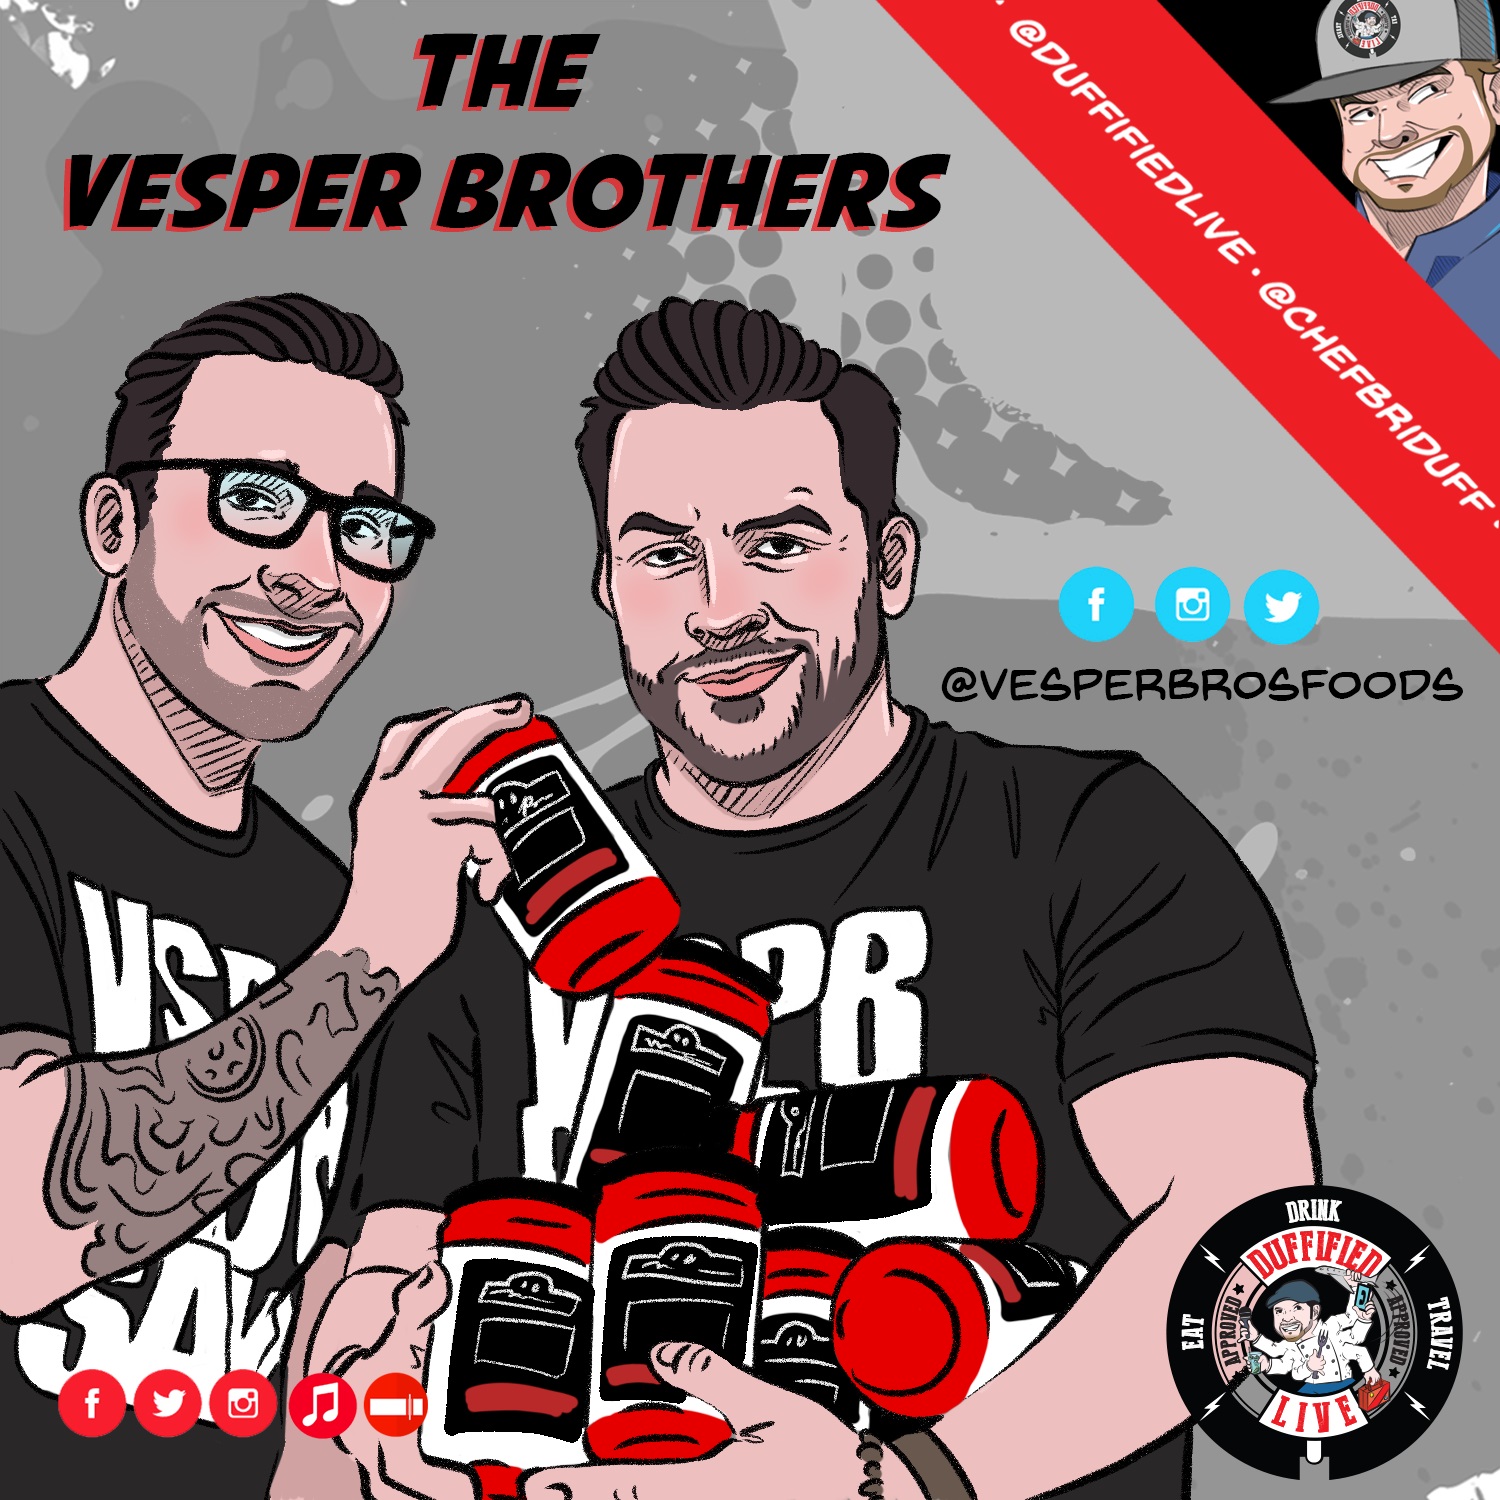 The Vesper Brothers